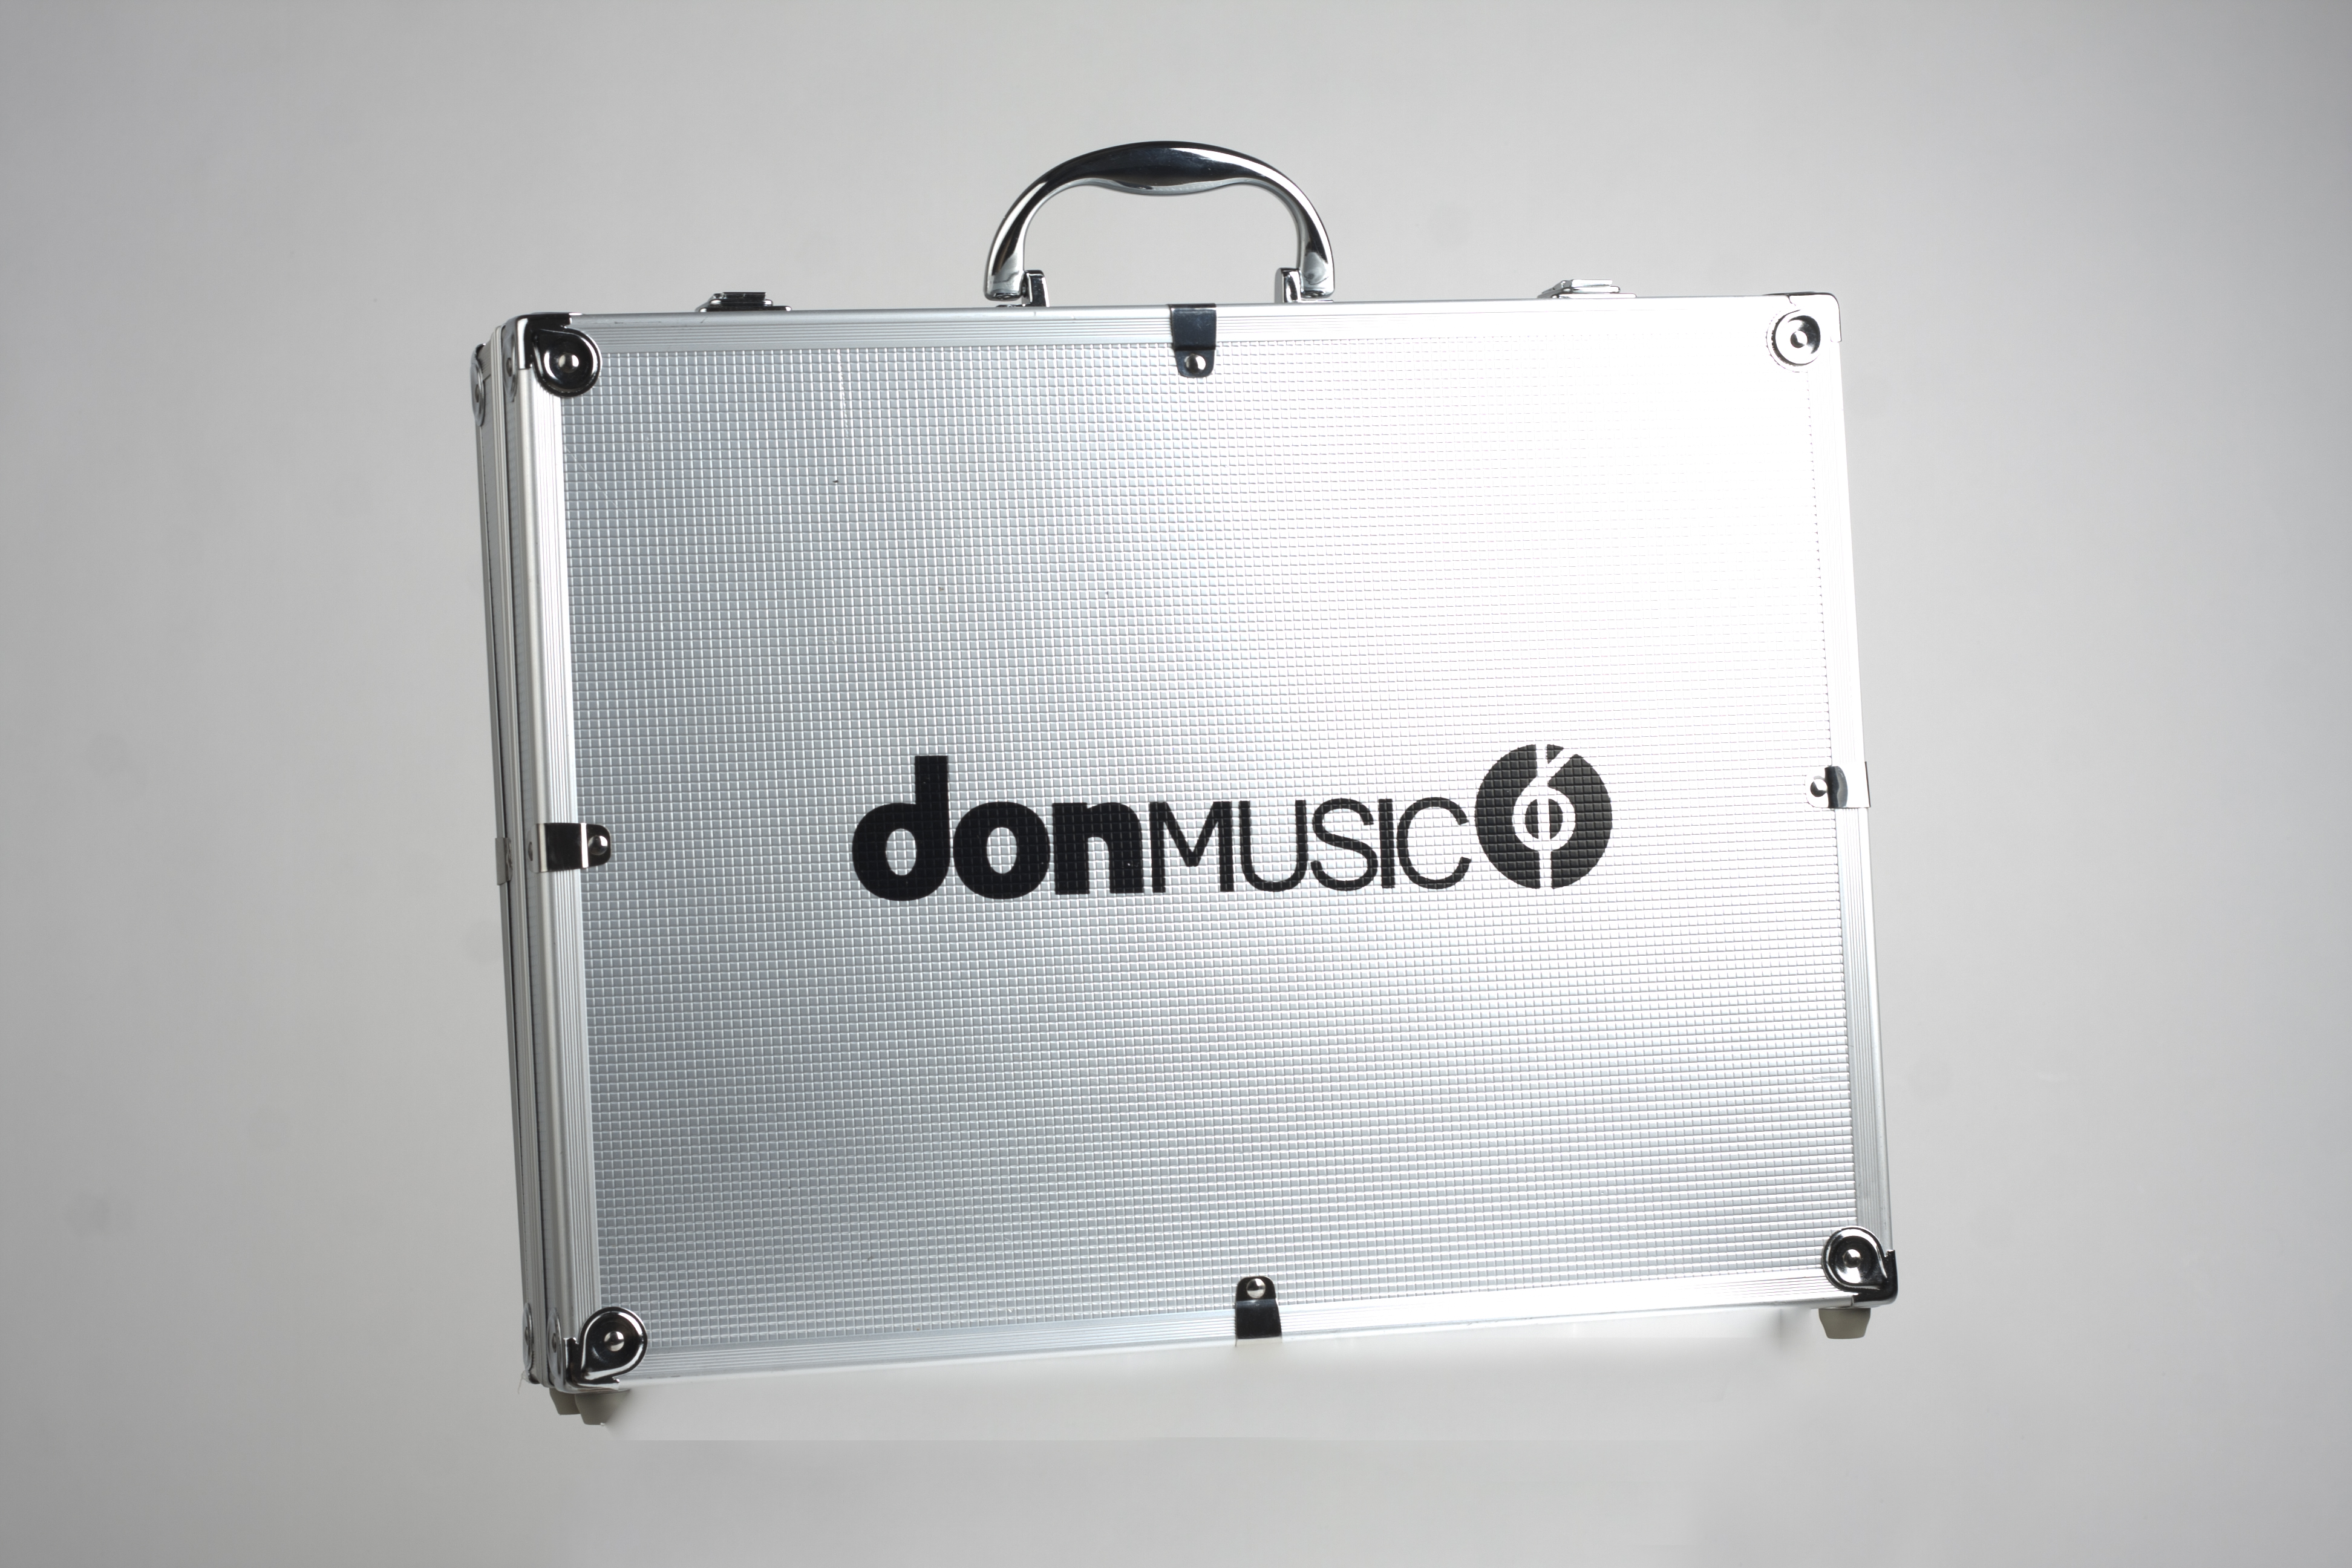 Don Music DM-AK - кейс для радиосистем